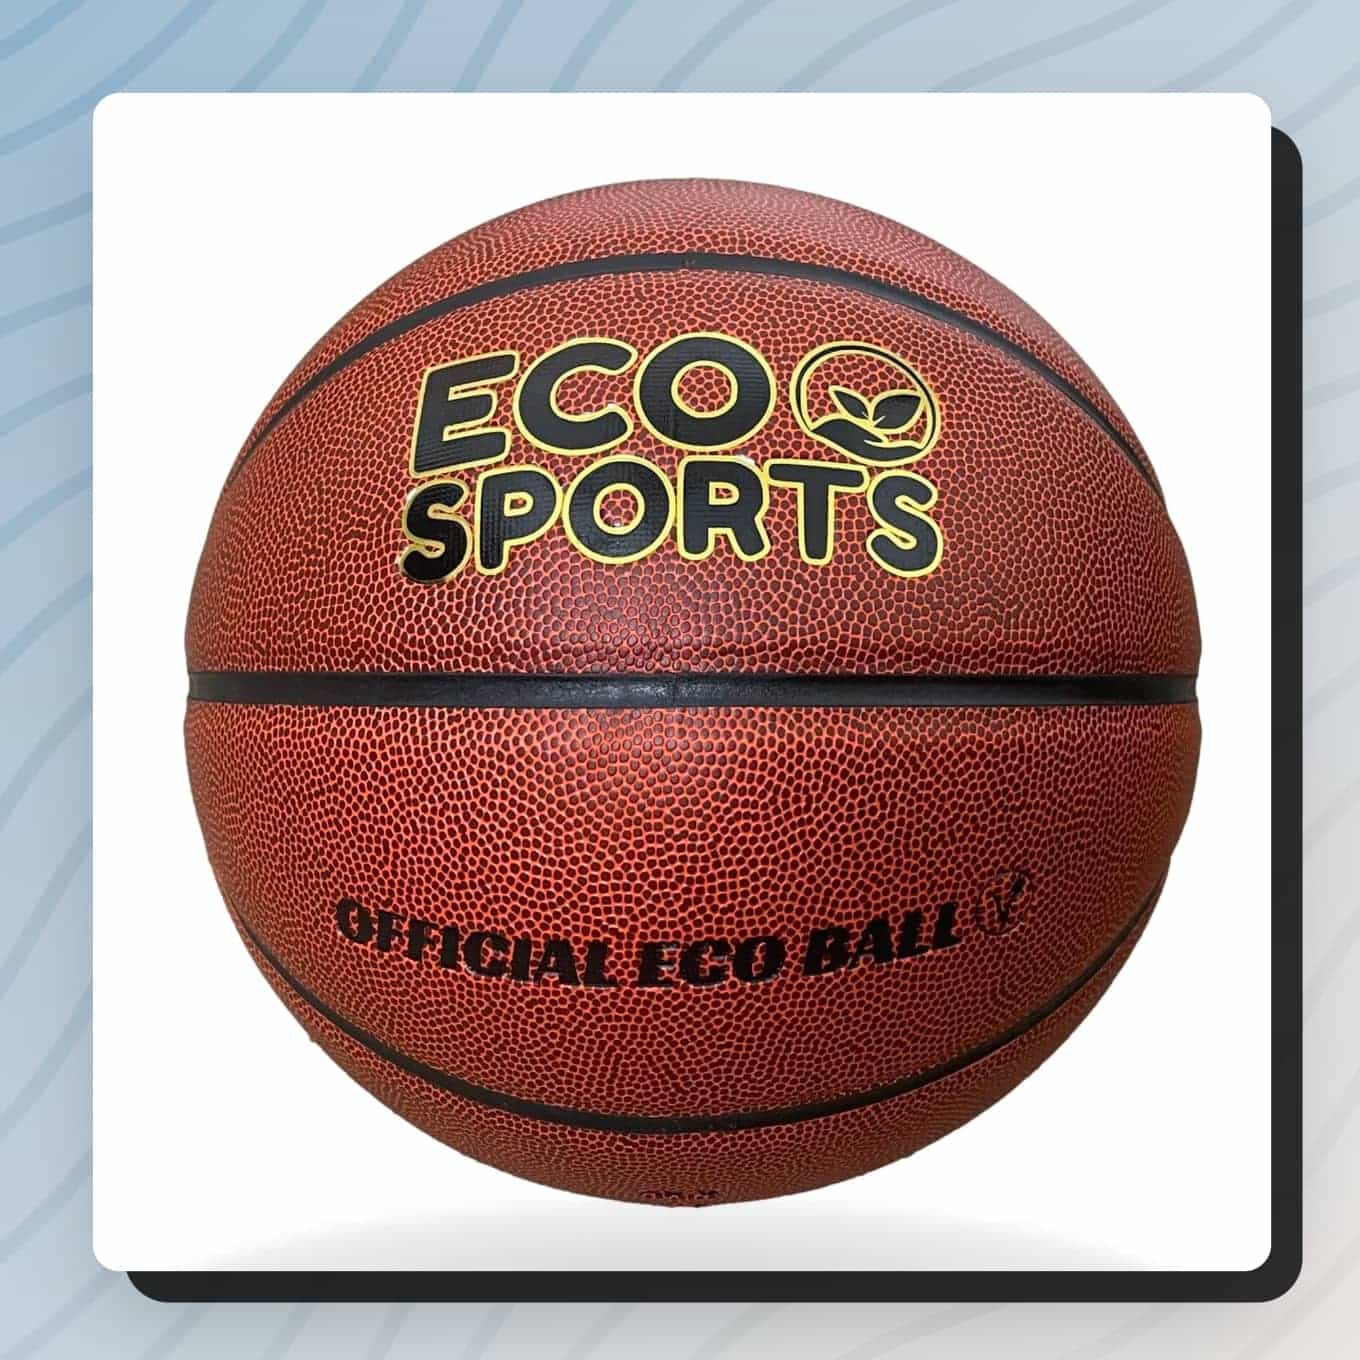 Eco Sports basketbal